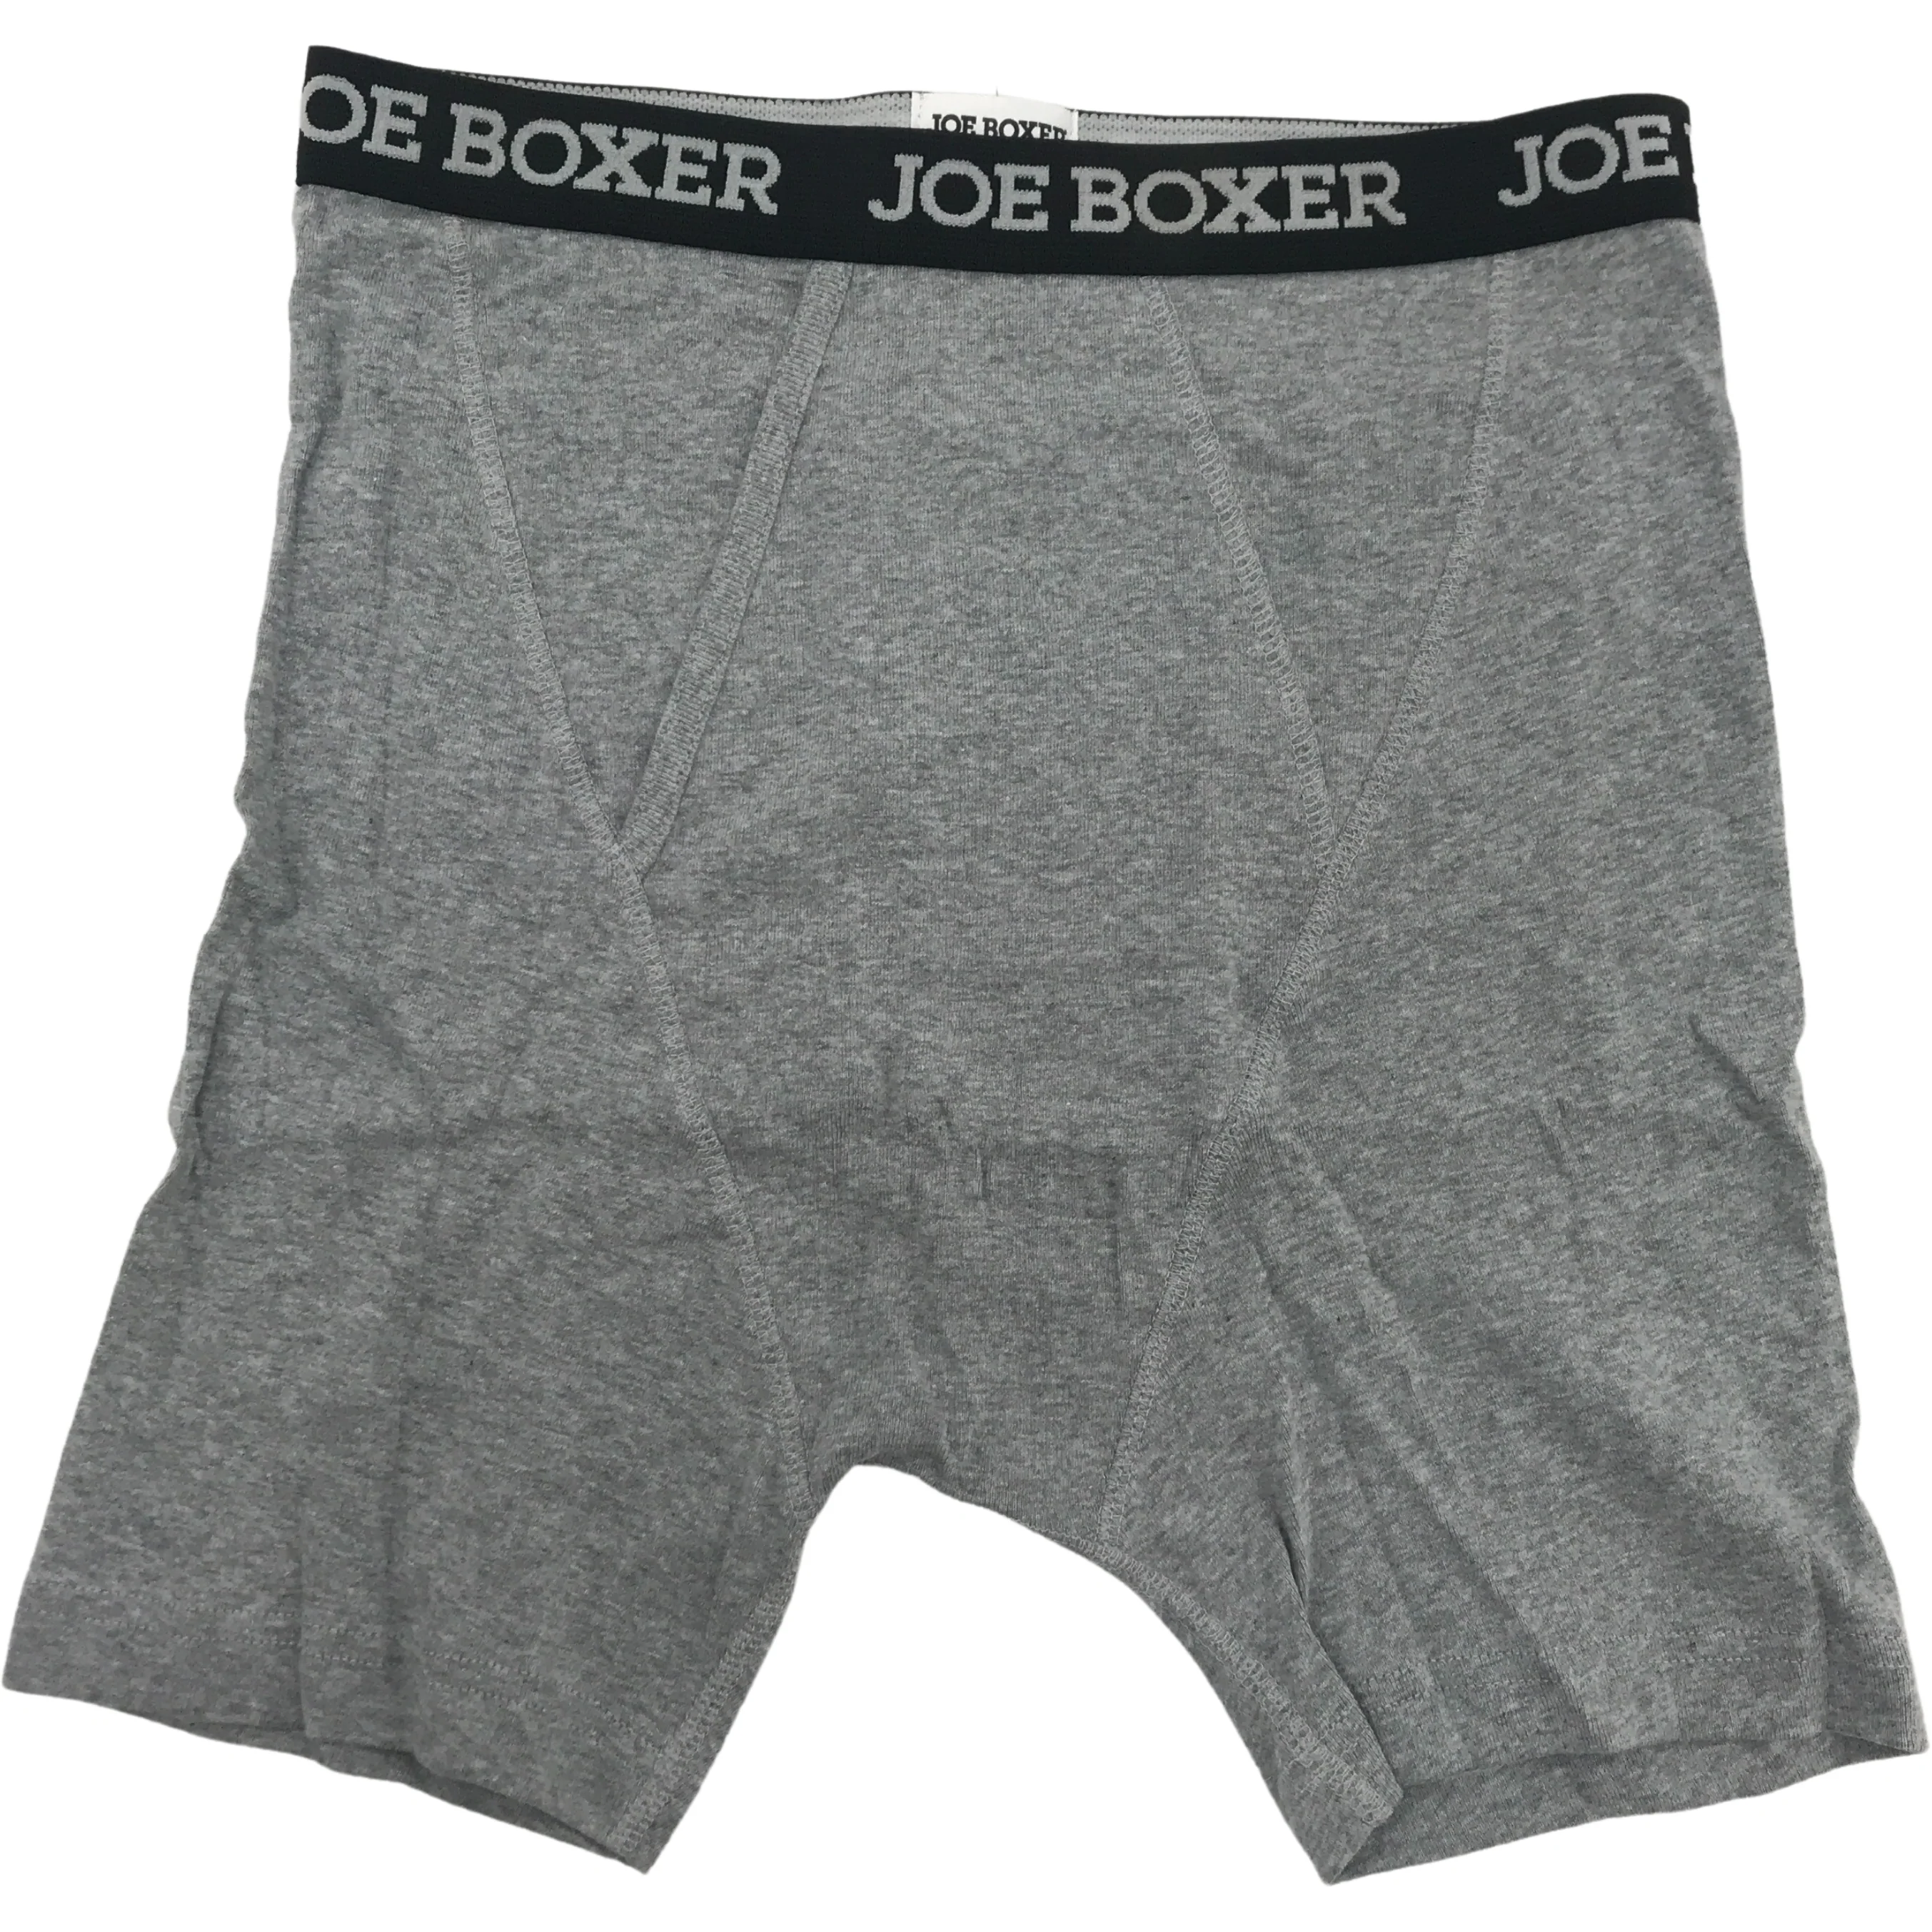 Joe Boxer Men's Grey Underwear / 3 Pack / Various Sizes